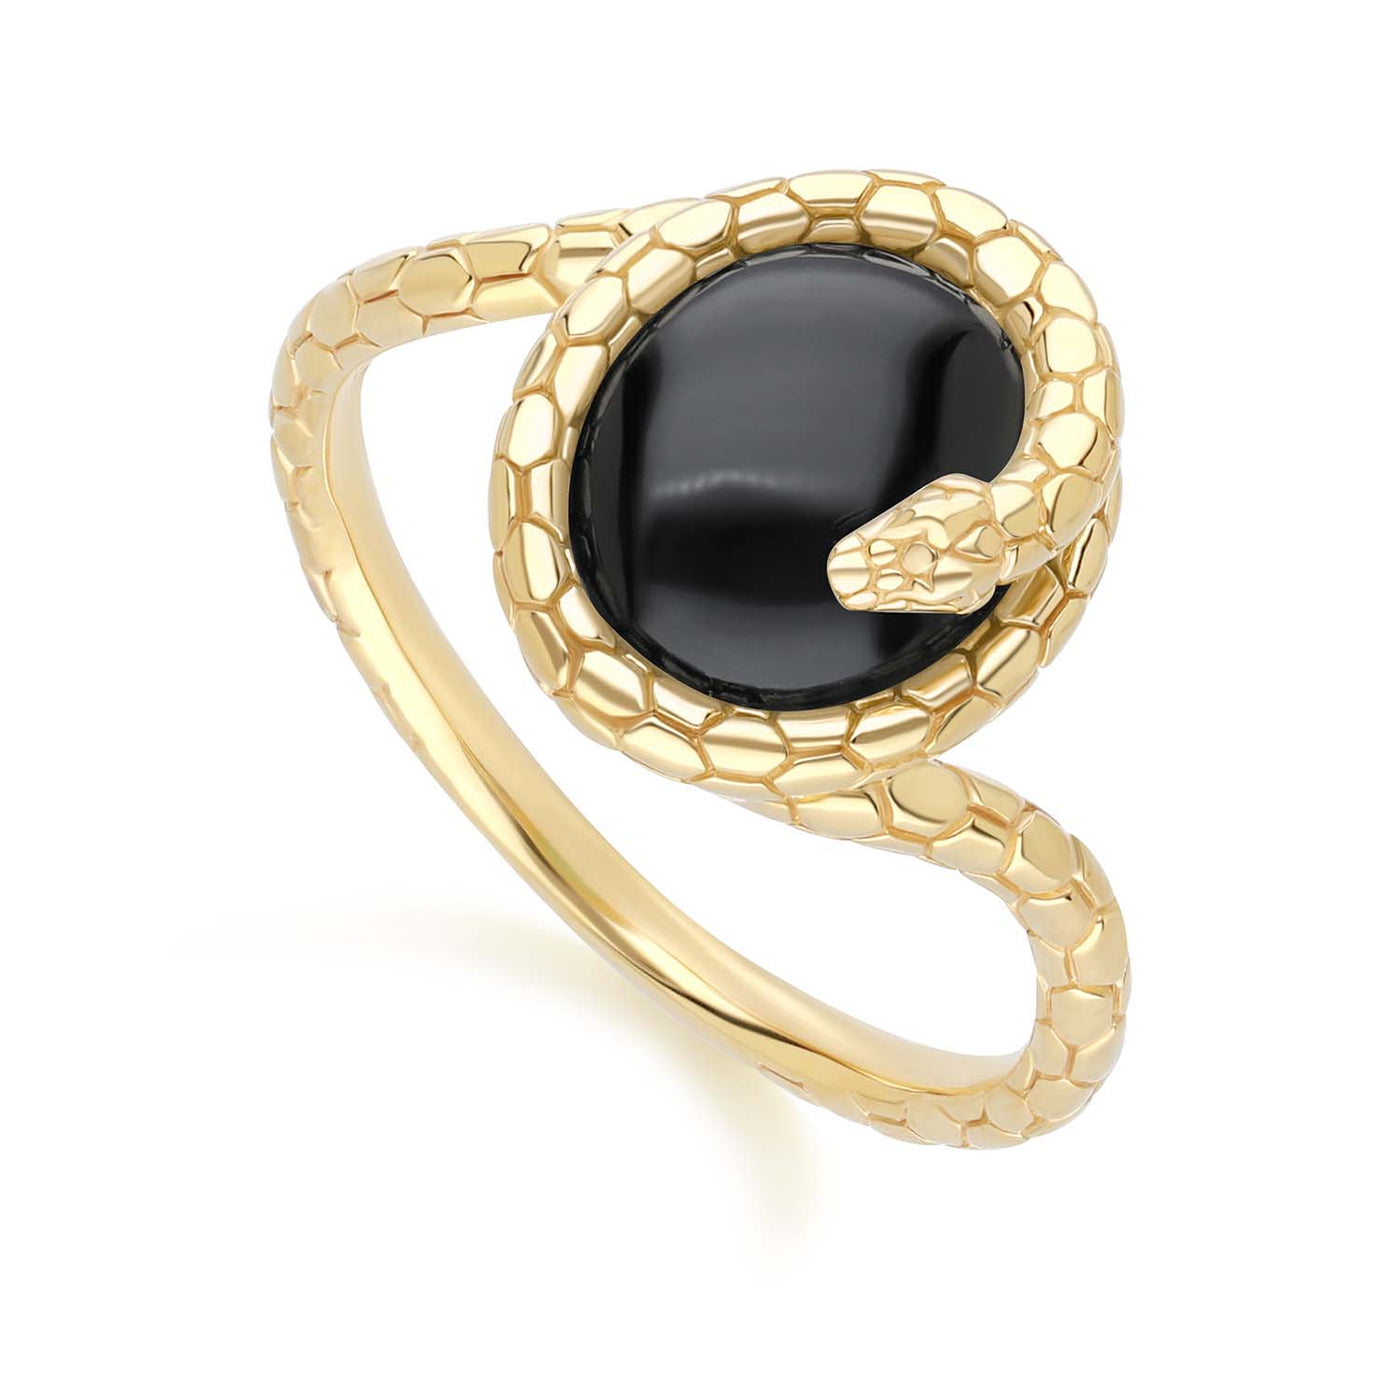 The Ruler Sterling Silver 925 Oval Black Onyx Winding Snake Ring